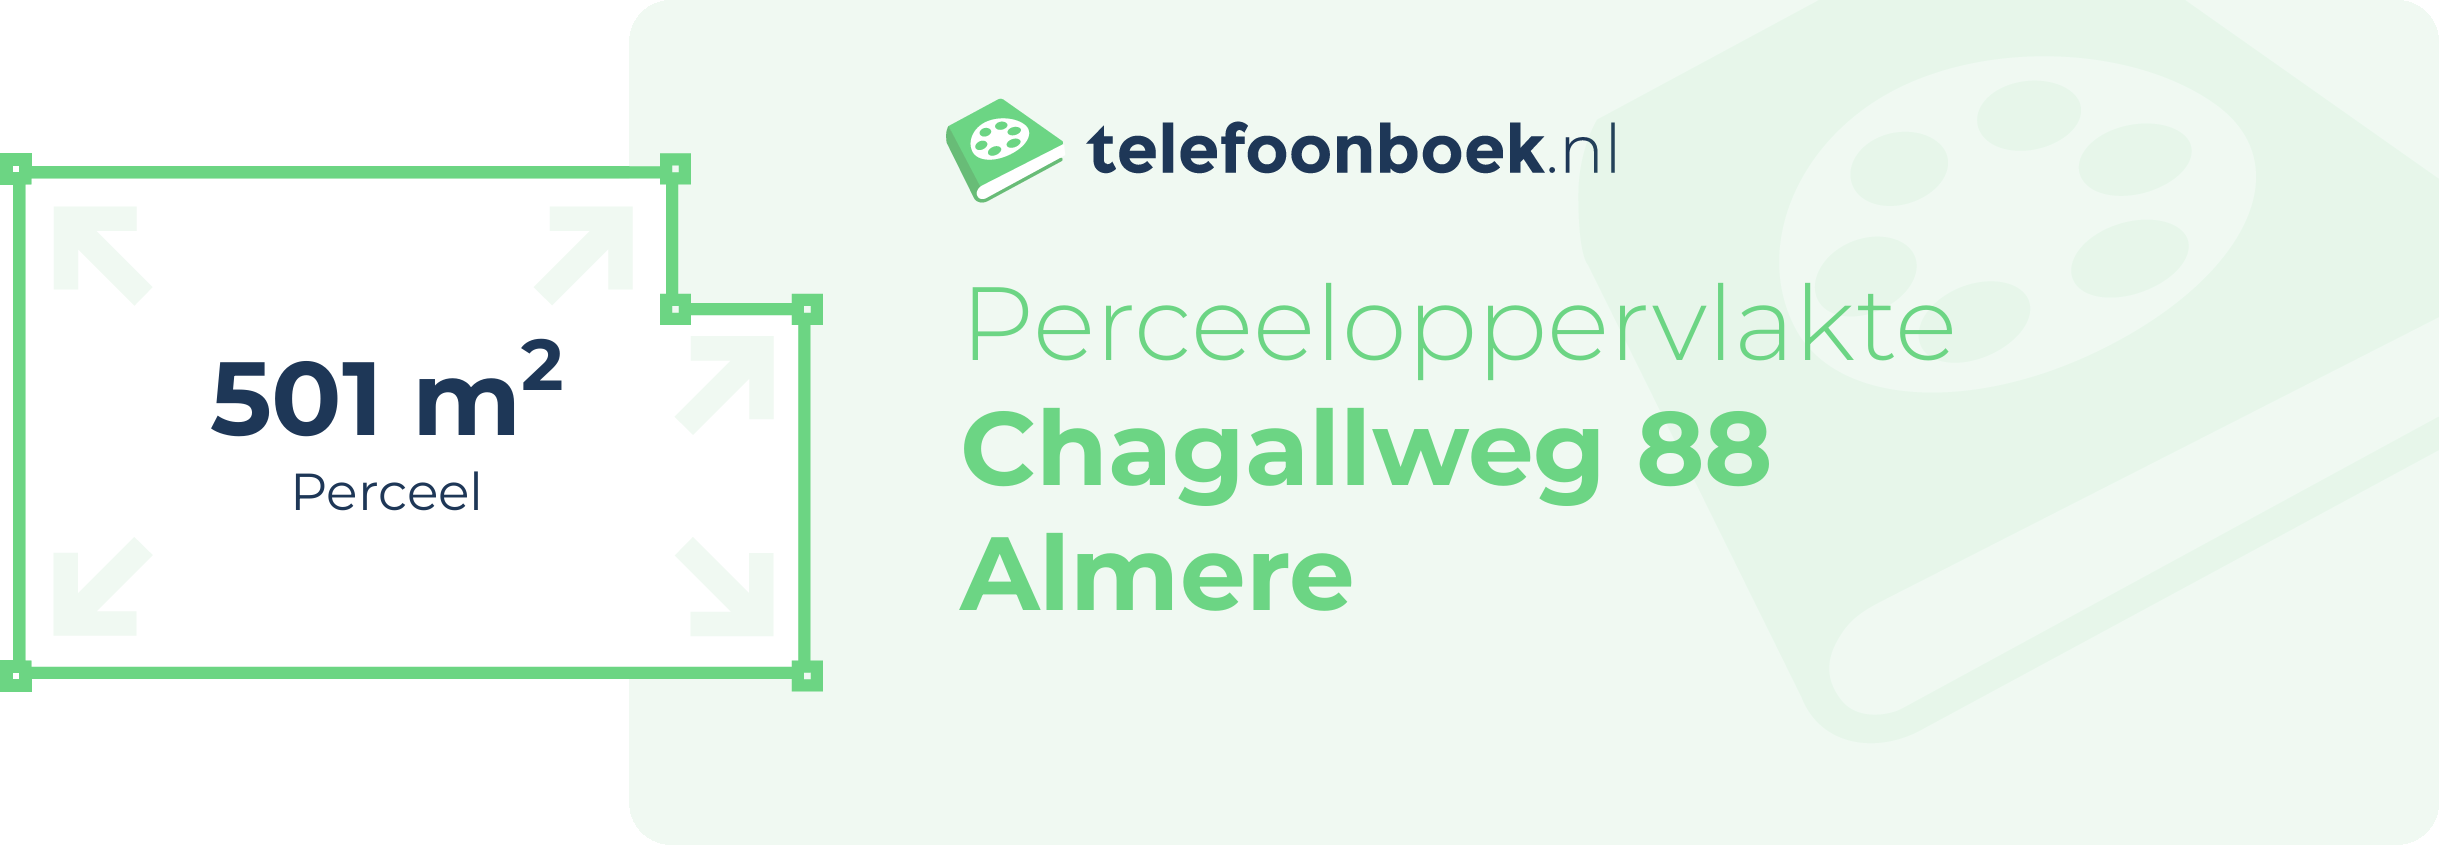 Perceeloppervlakte Chagallweg 88 Almere